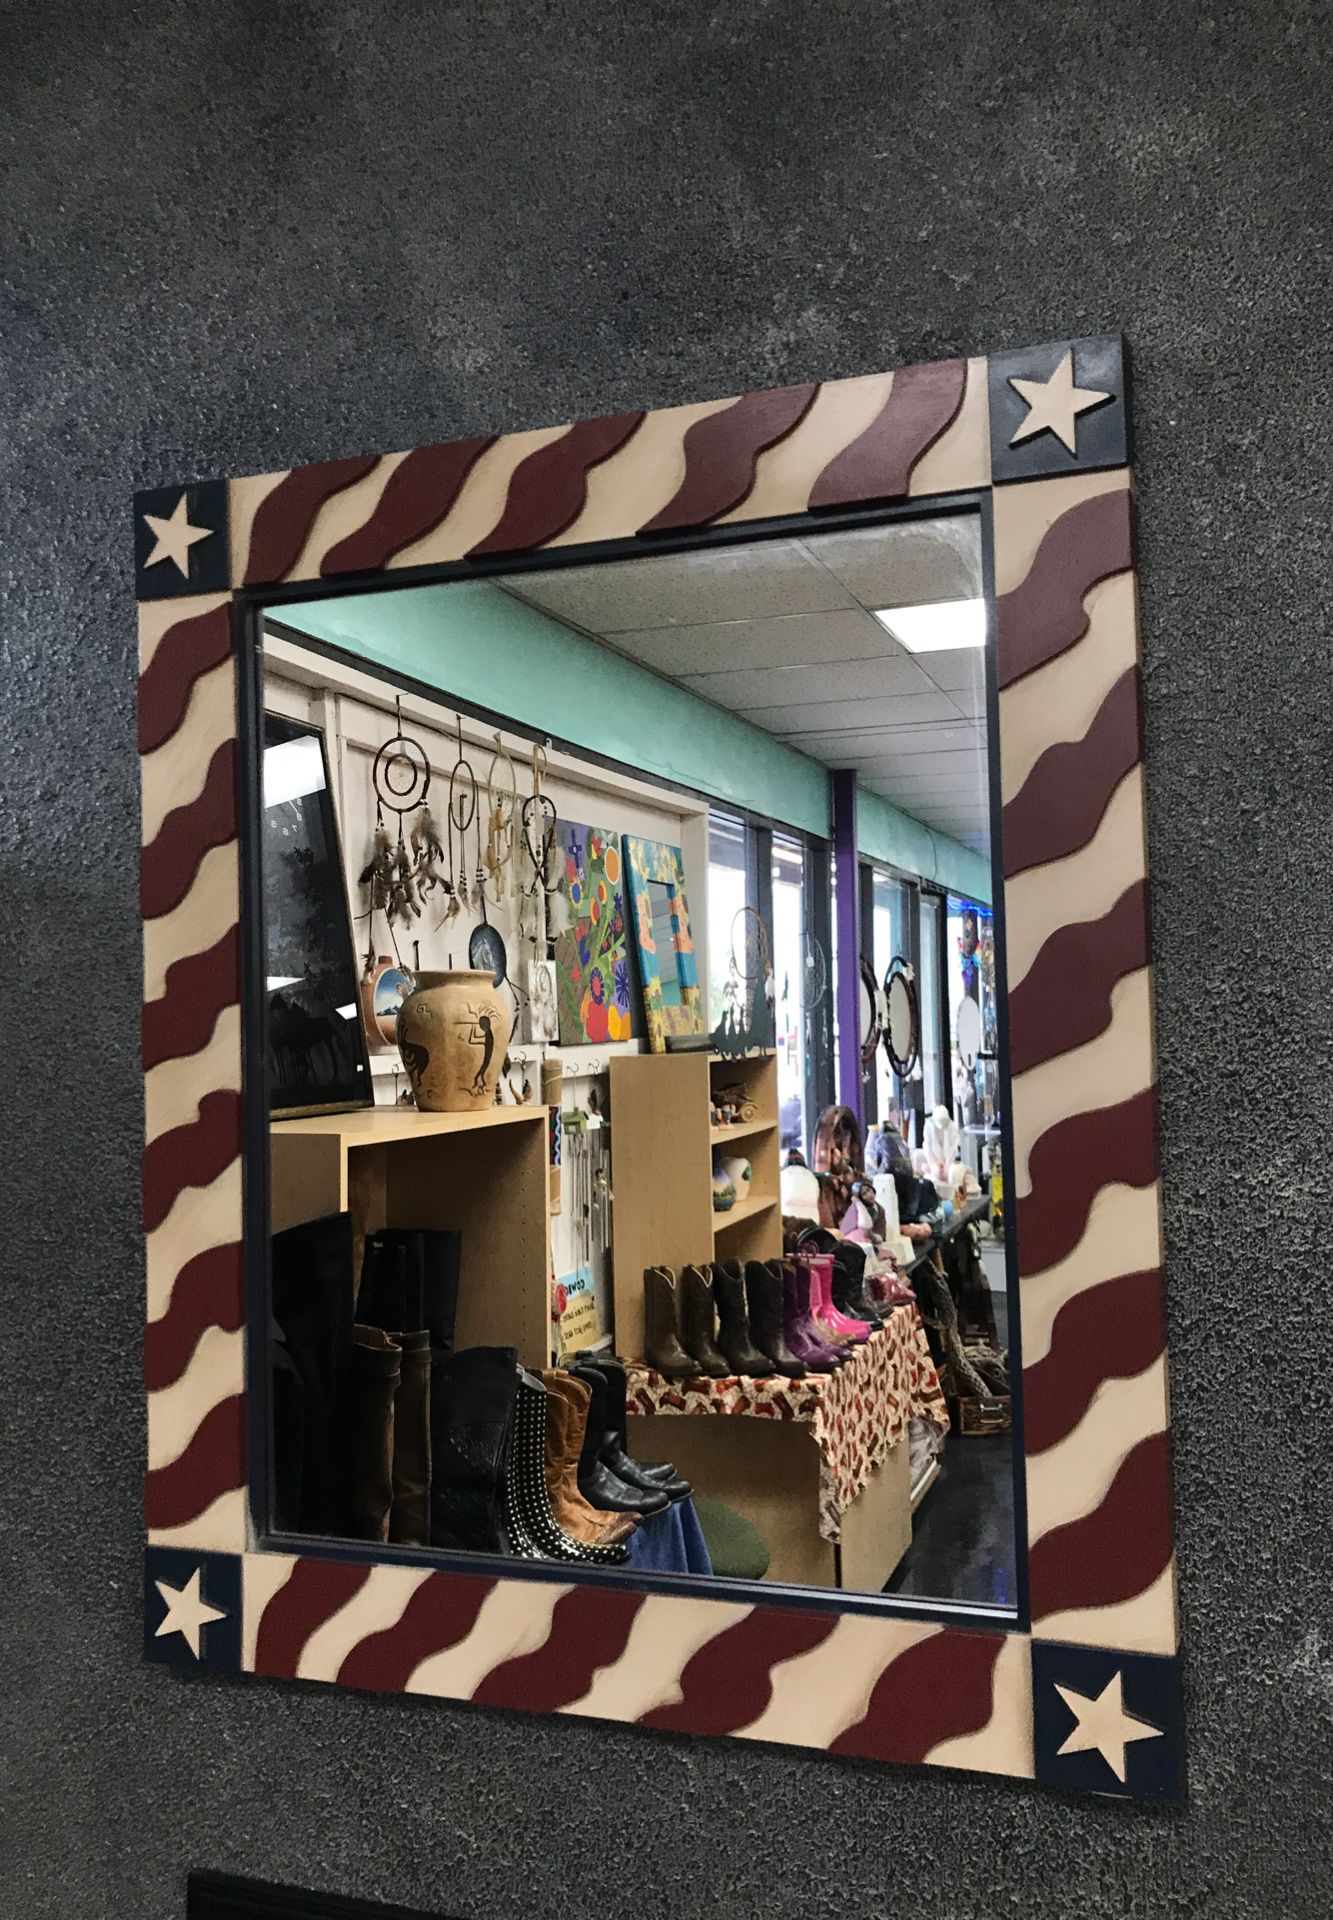 American Flag Mirror